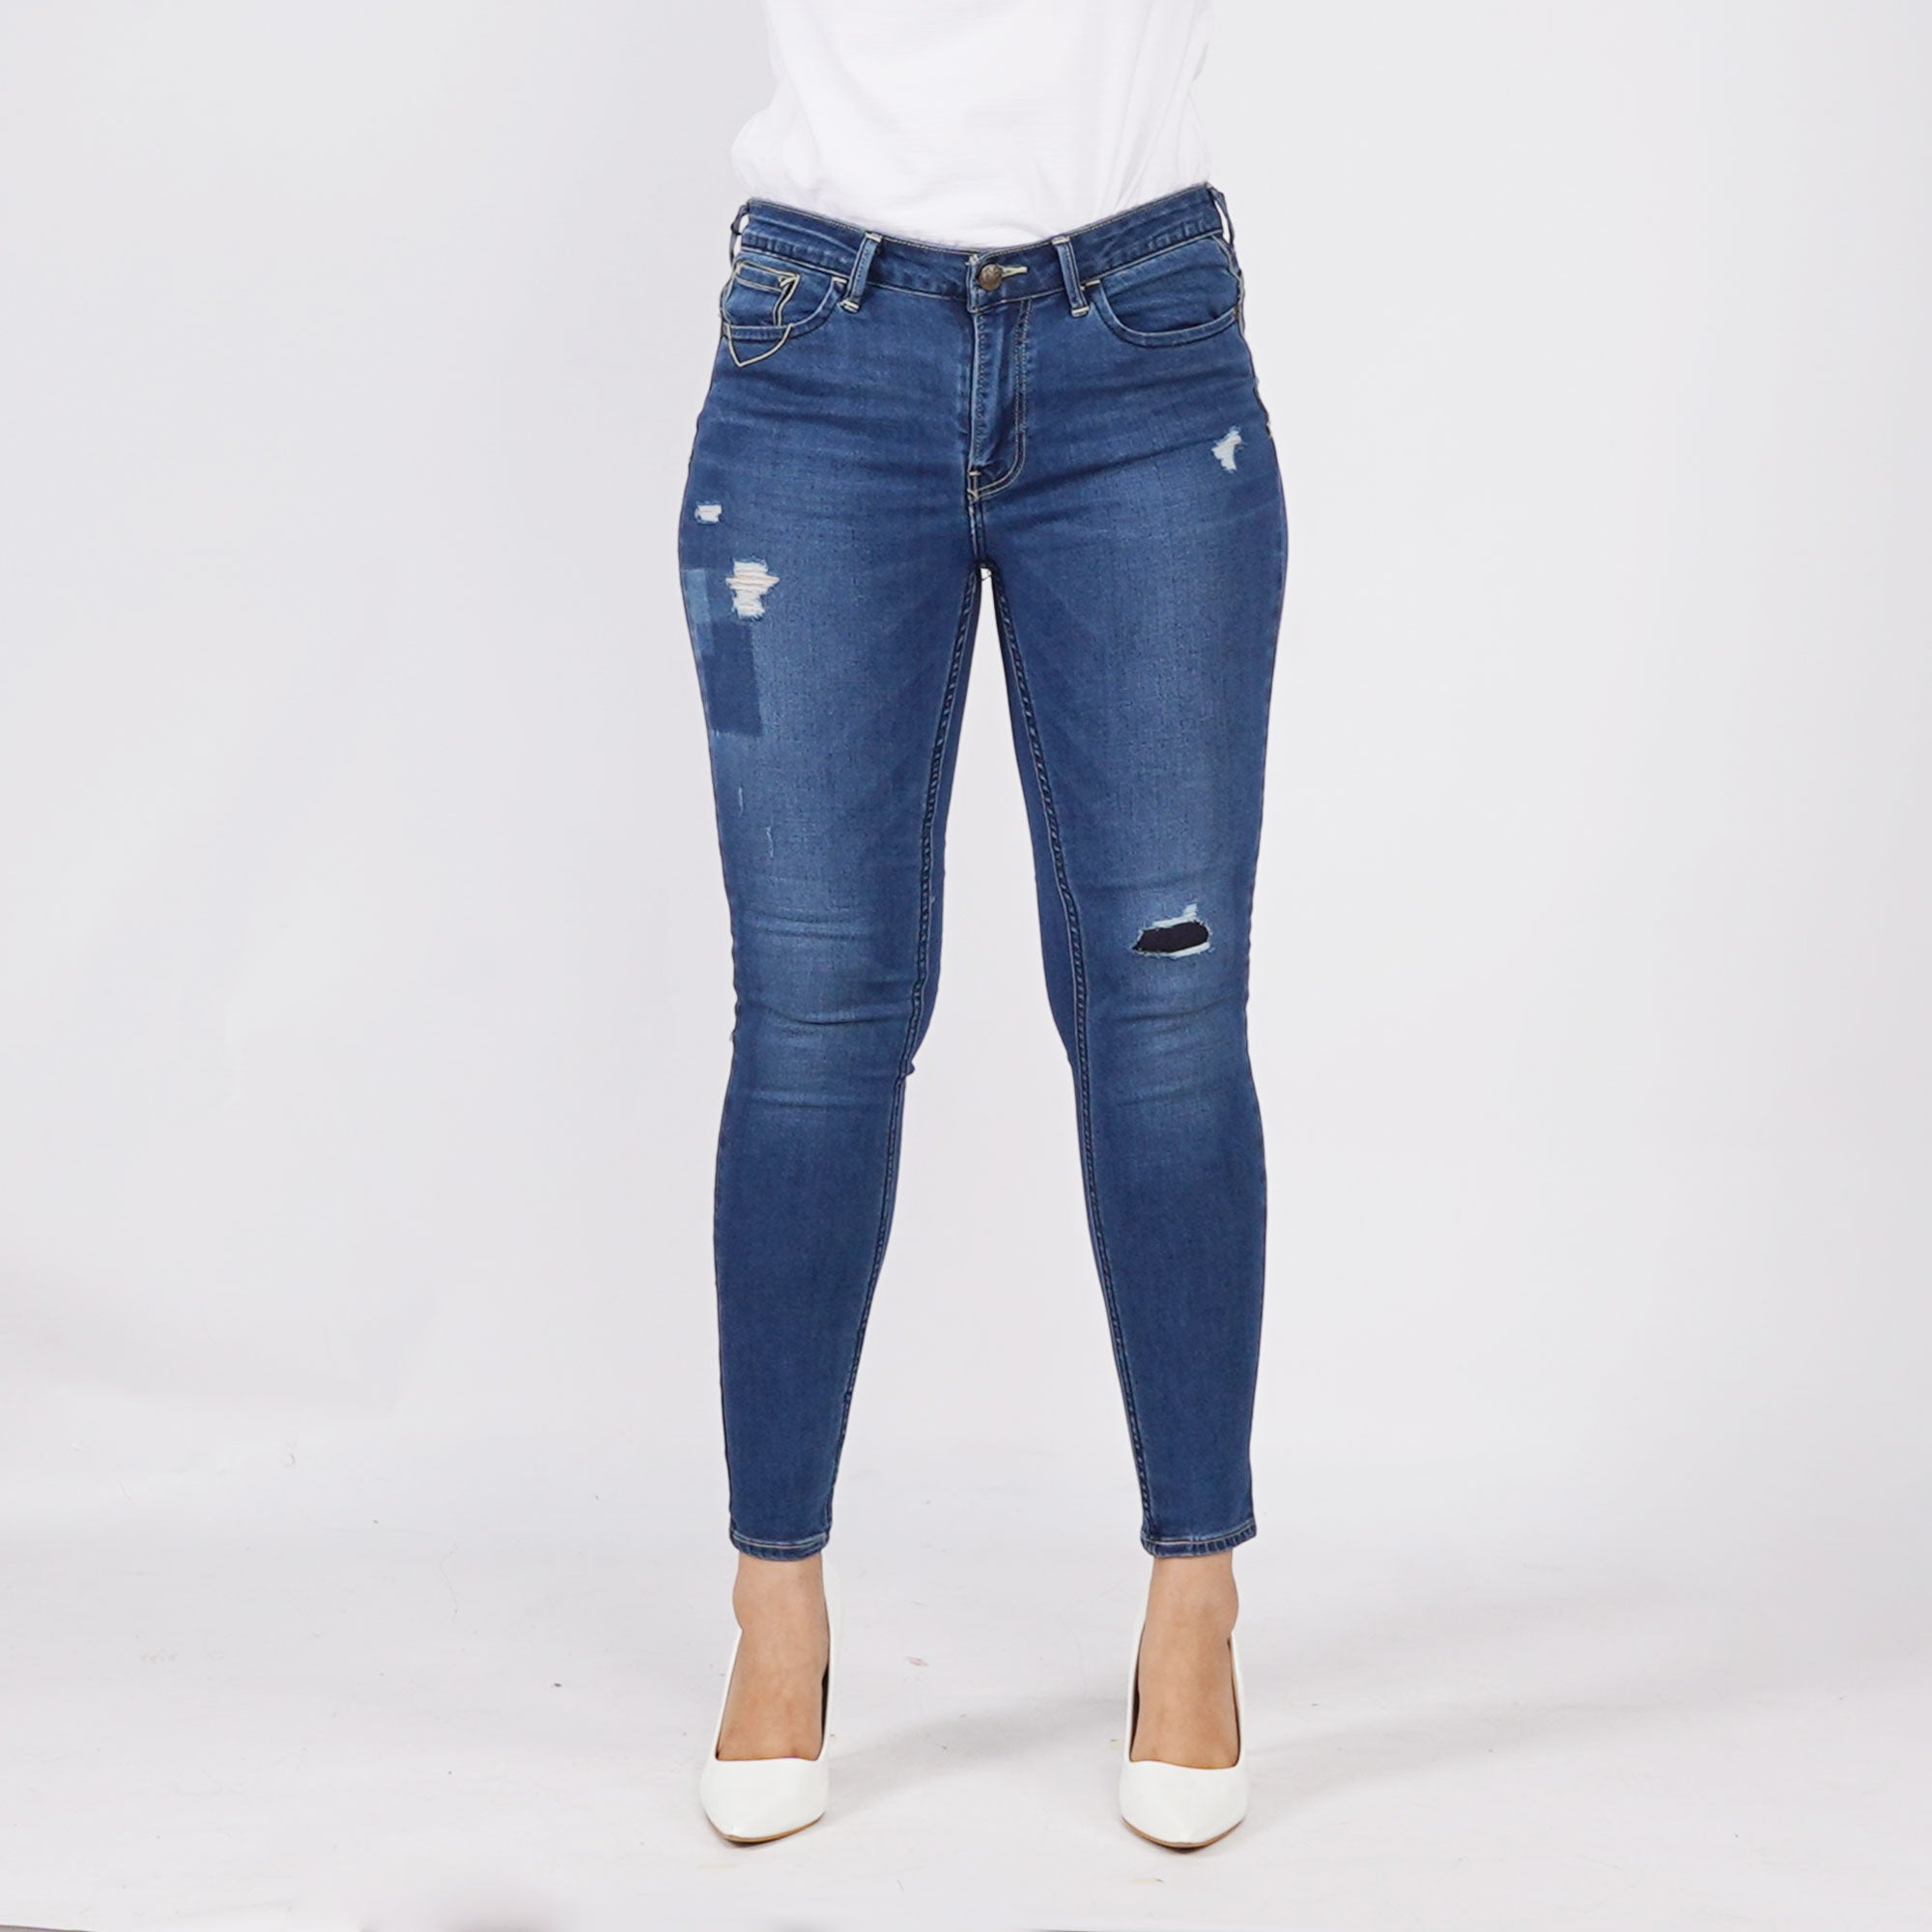 Bobson Japanese Ladies Basic Denim Mom jeans for Women Trendy Fashion High Quality Apparel Comfortable Casual Pants for Women Slim Fit Mid Waist 149147 (Medium Shade)